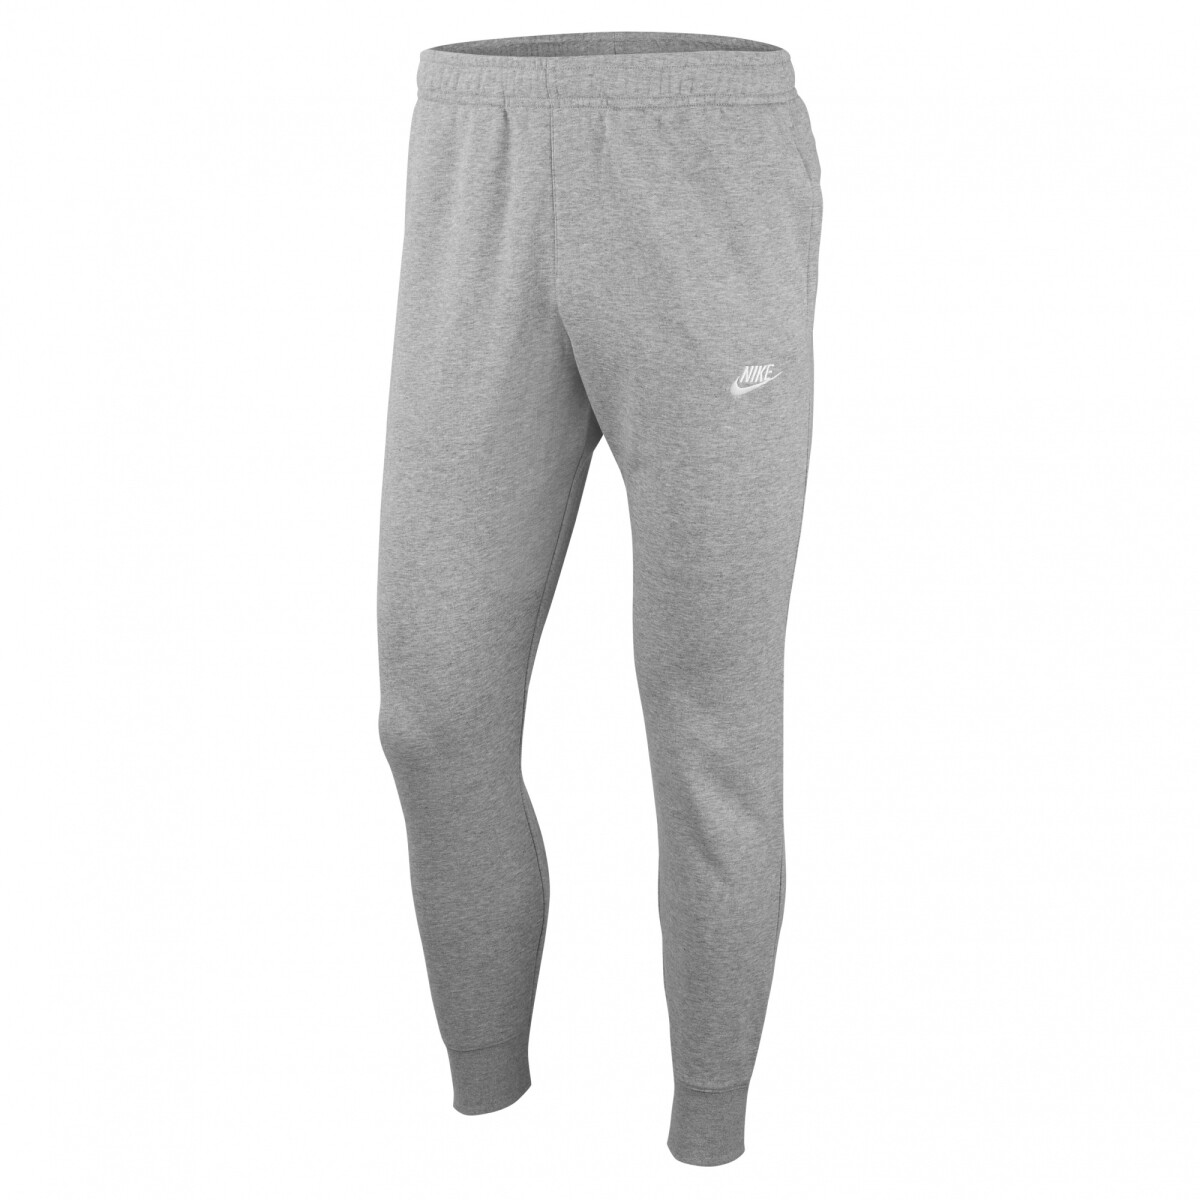 Pantalon Nike Moda Hombre Gris Chuping - S/C 